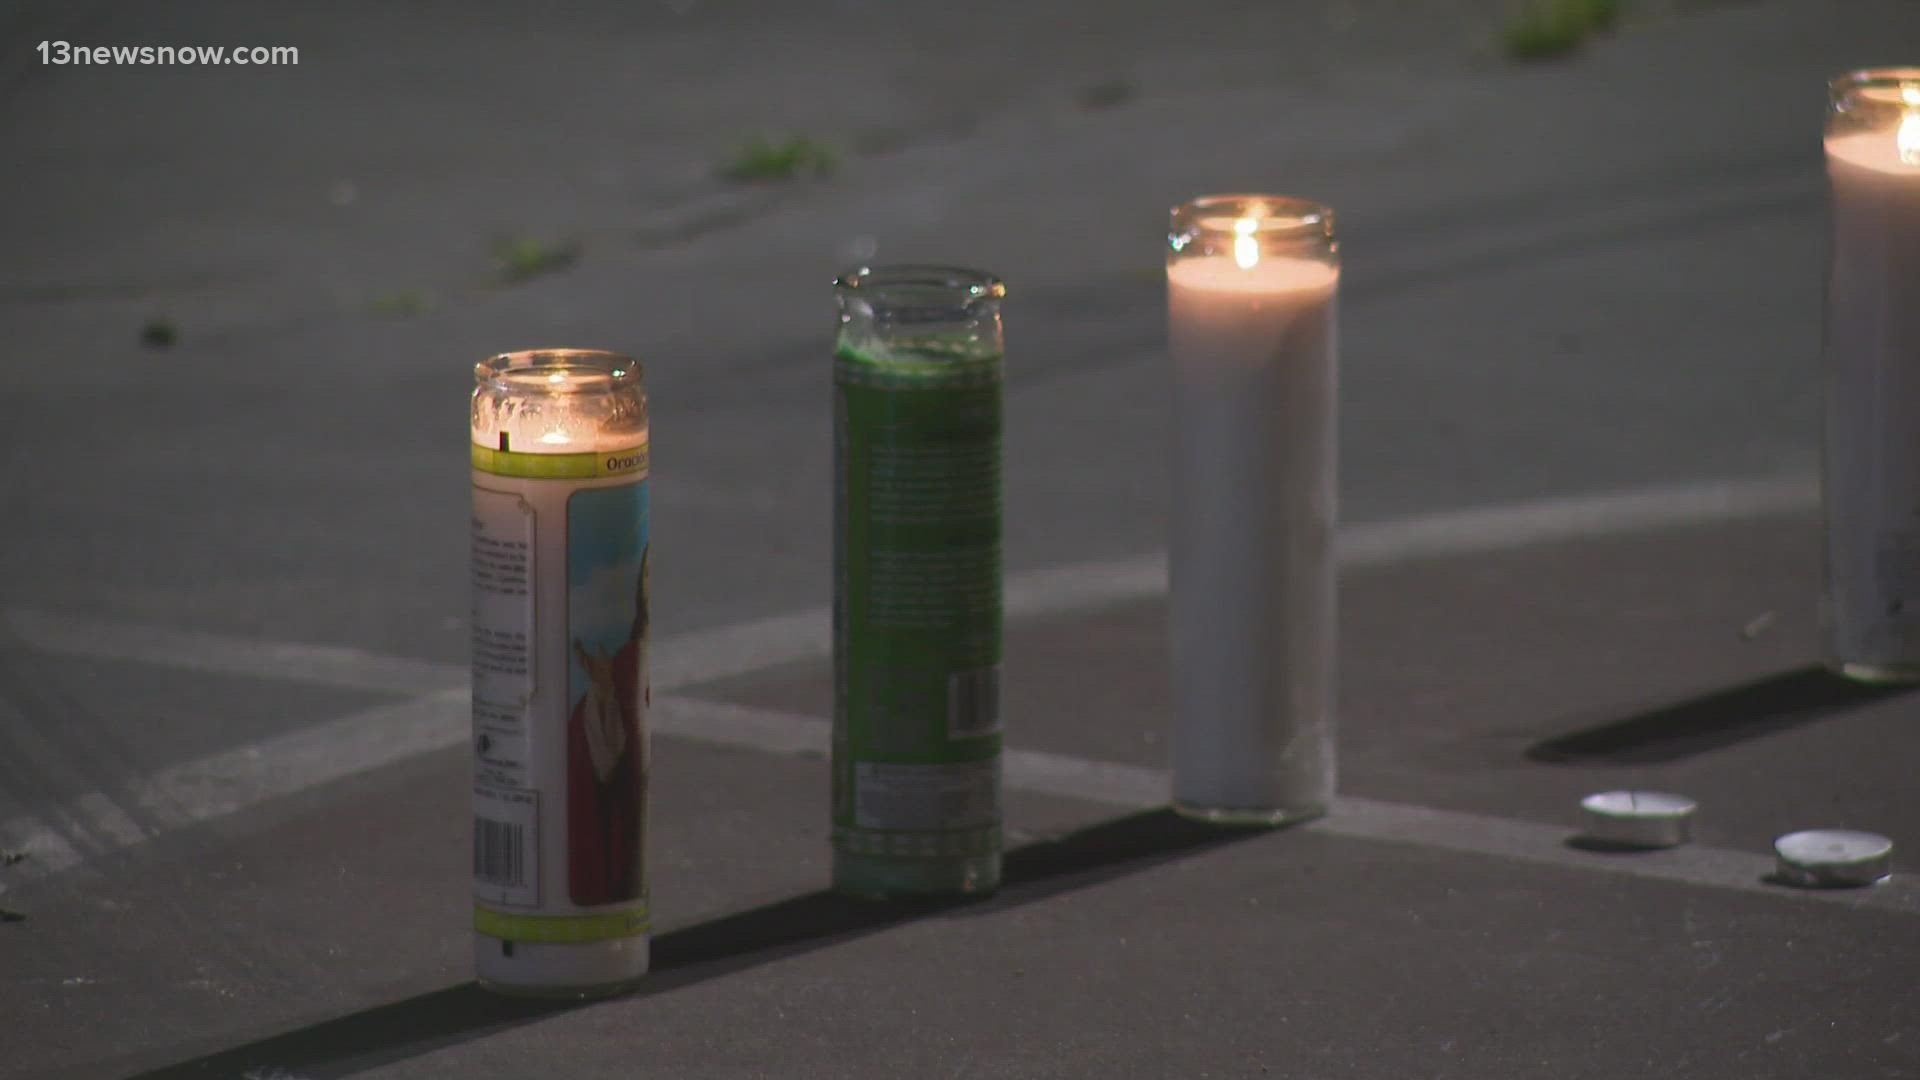 The shooting happened near Berkley Park around 7 p.m. Sunday, according to dispatchers.